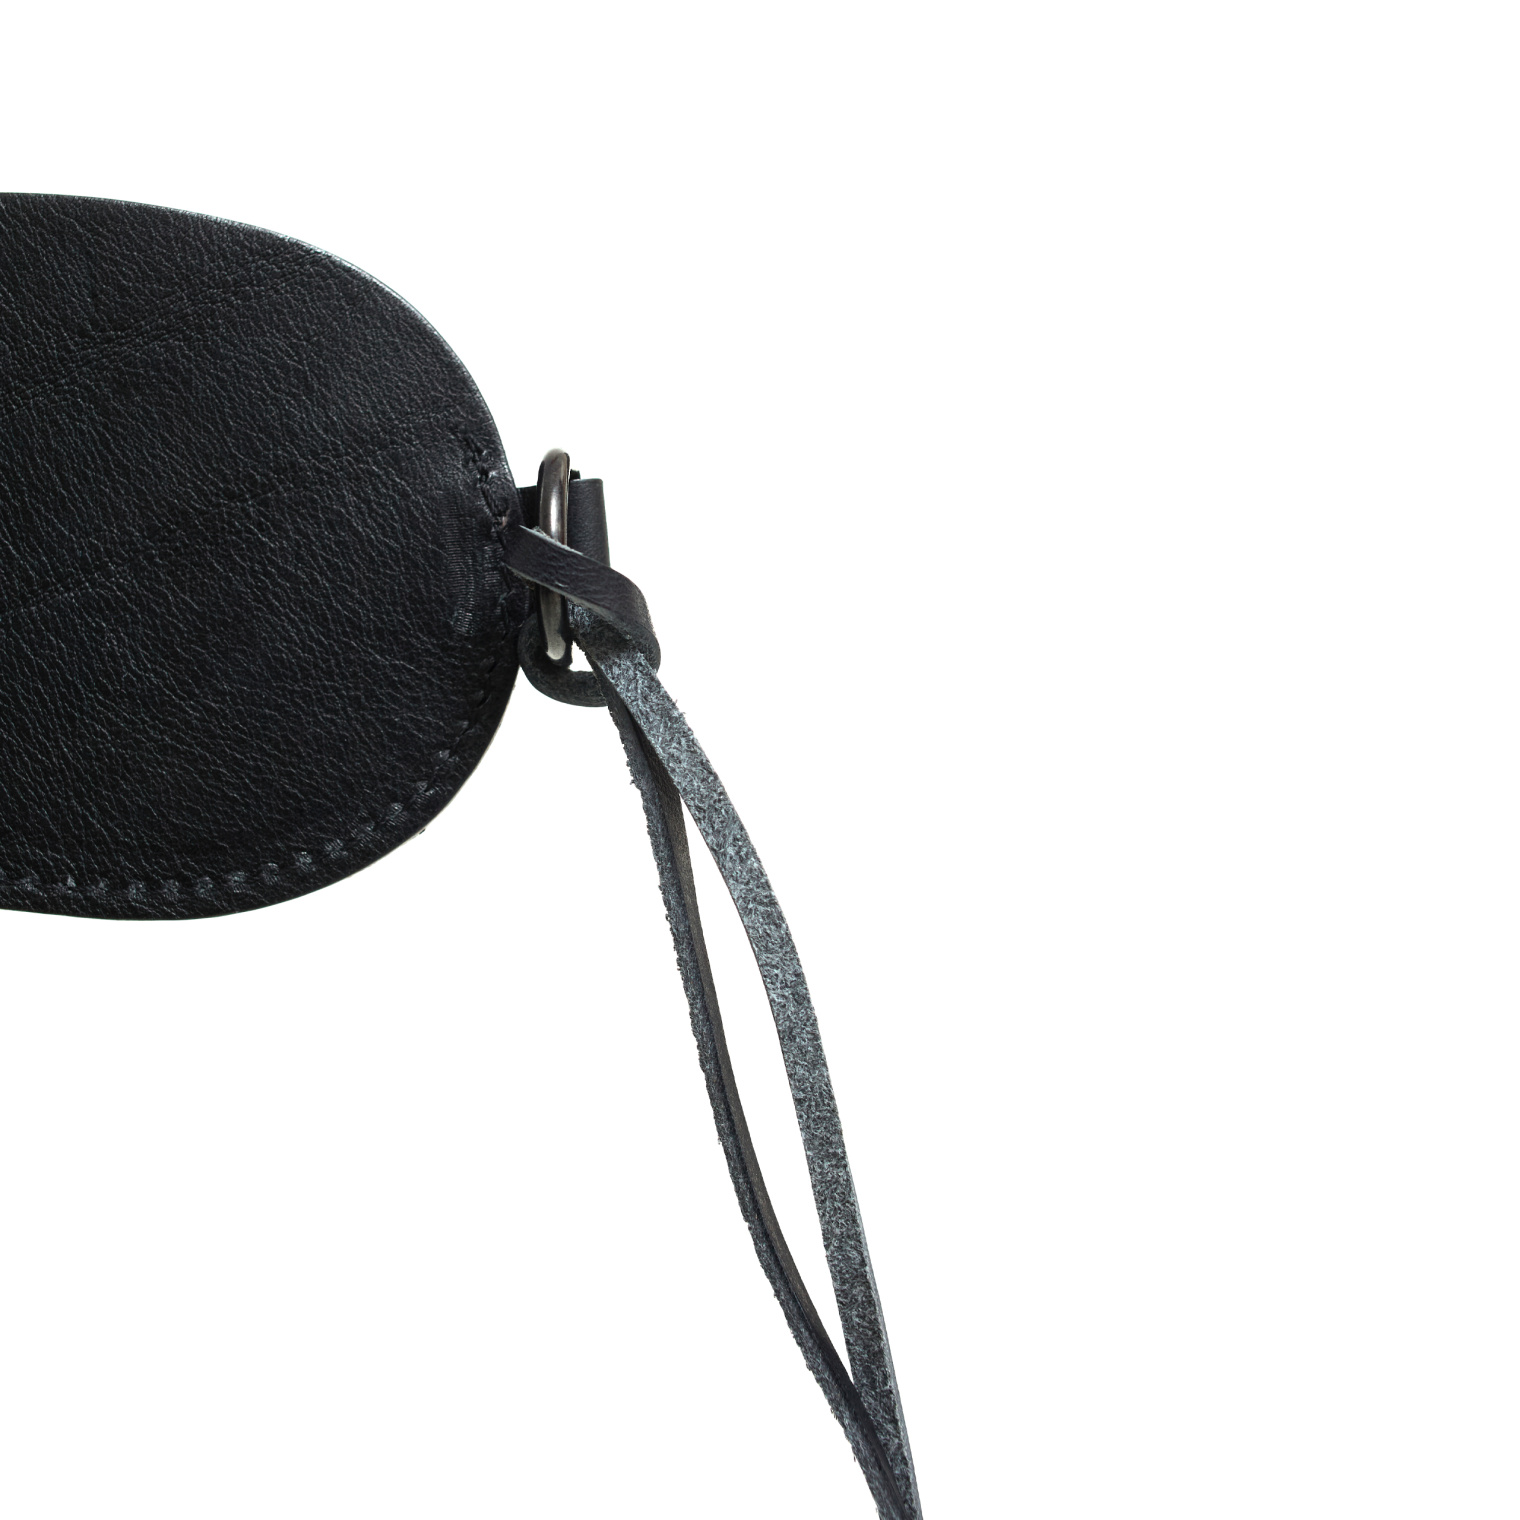 The Viridi-Anne Black leather glasses case